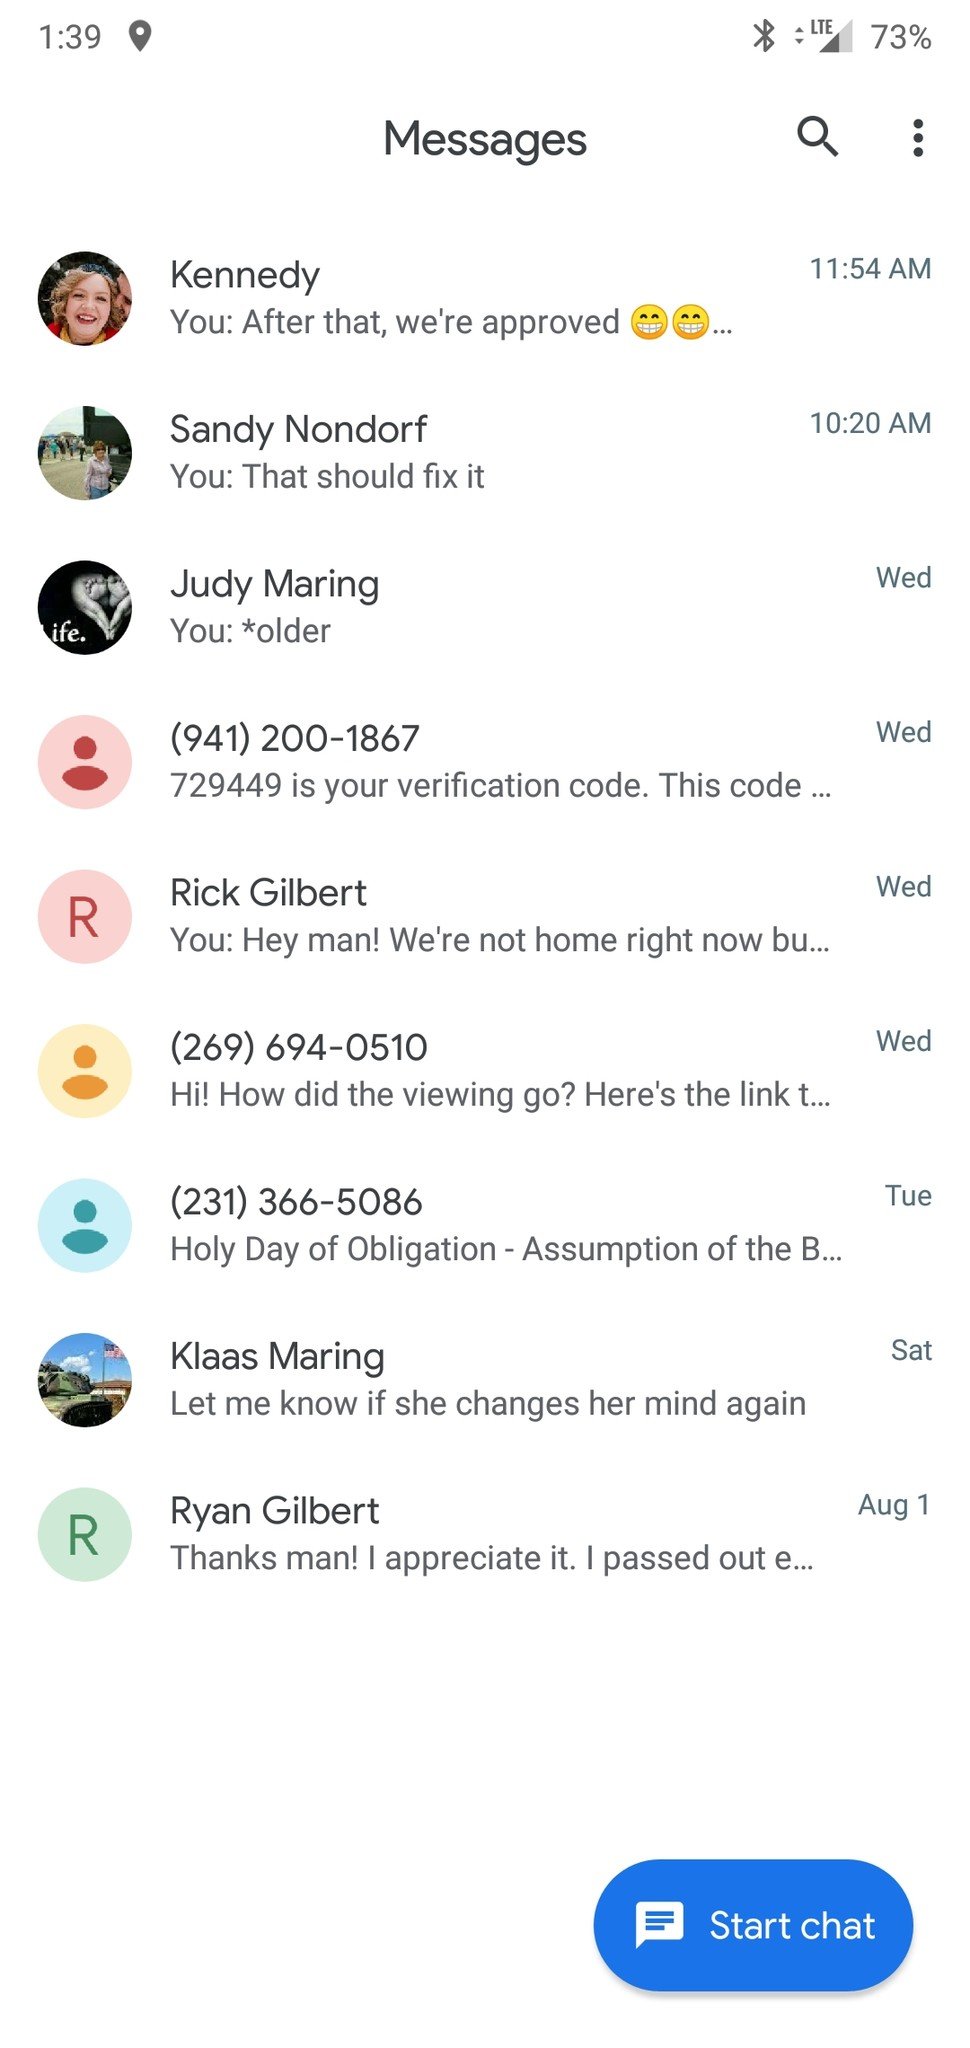 android-messages-new-1.jpg?itok=PEdYKzIM